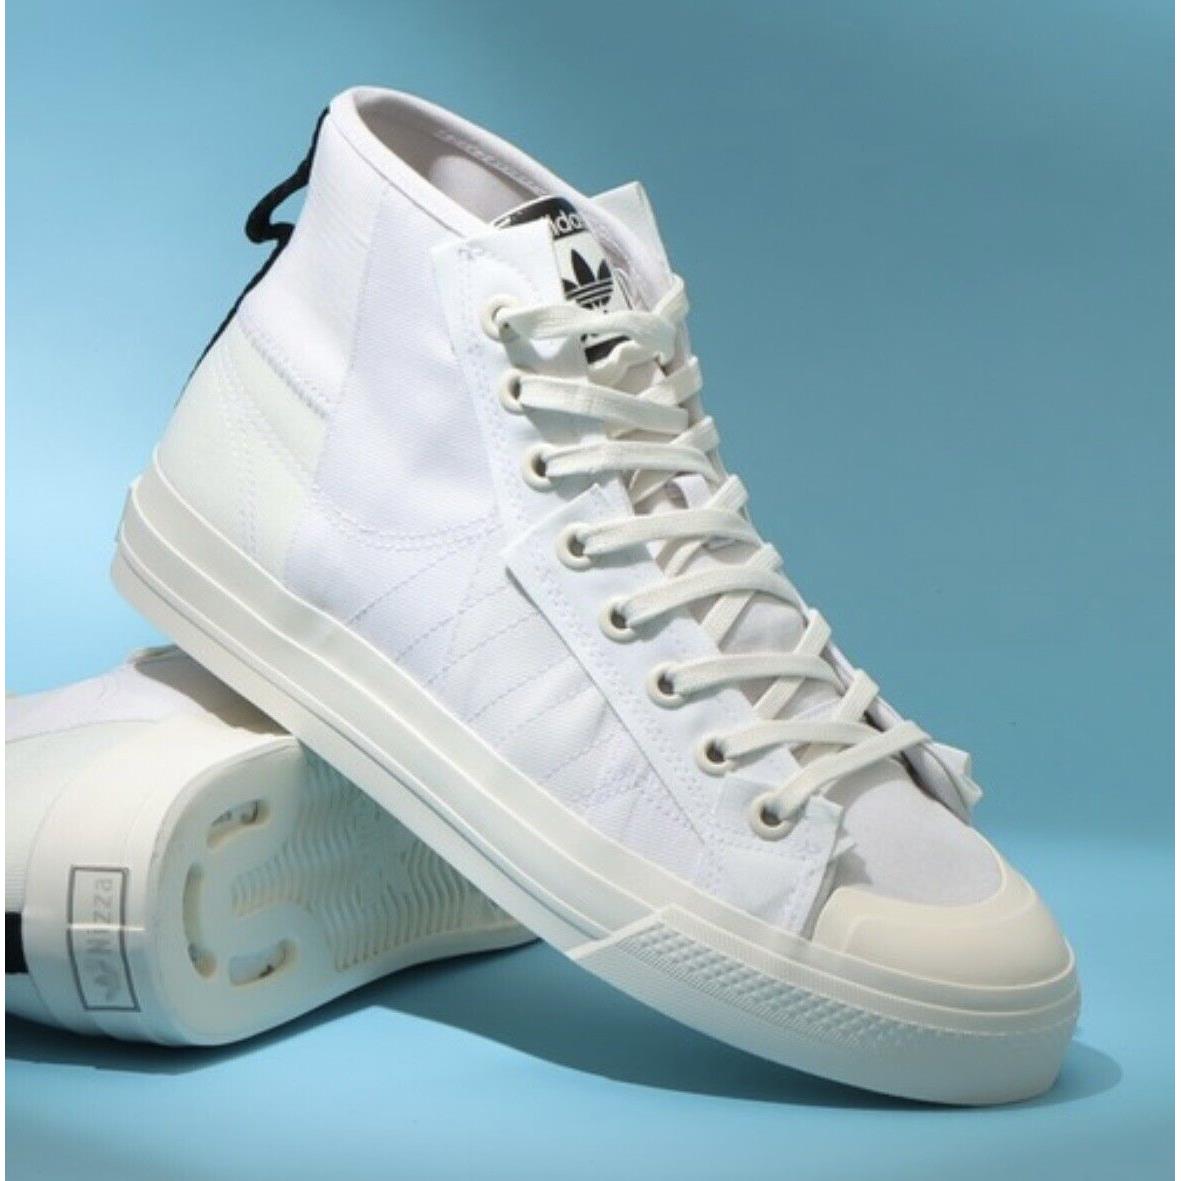 Adidas Nizza Hi Parley Men Casual Retro Skate Shoe White Black Sneaker Trainer